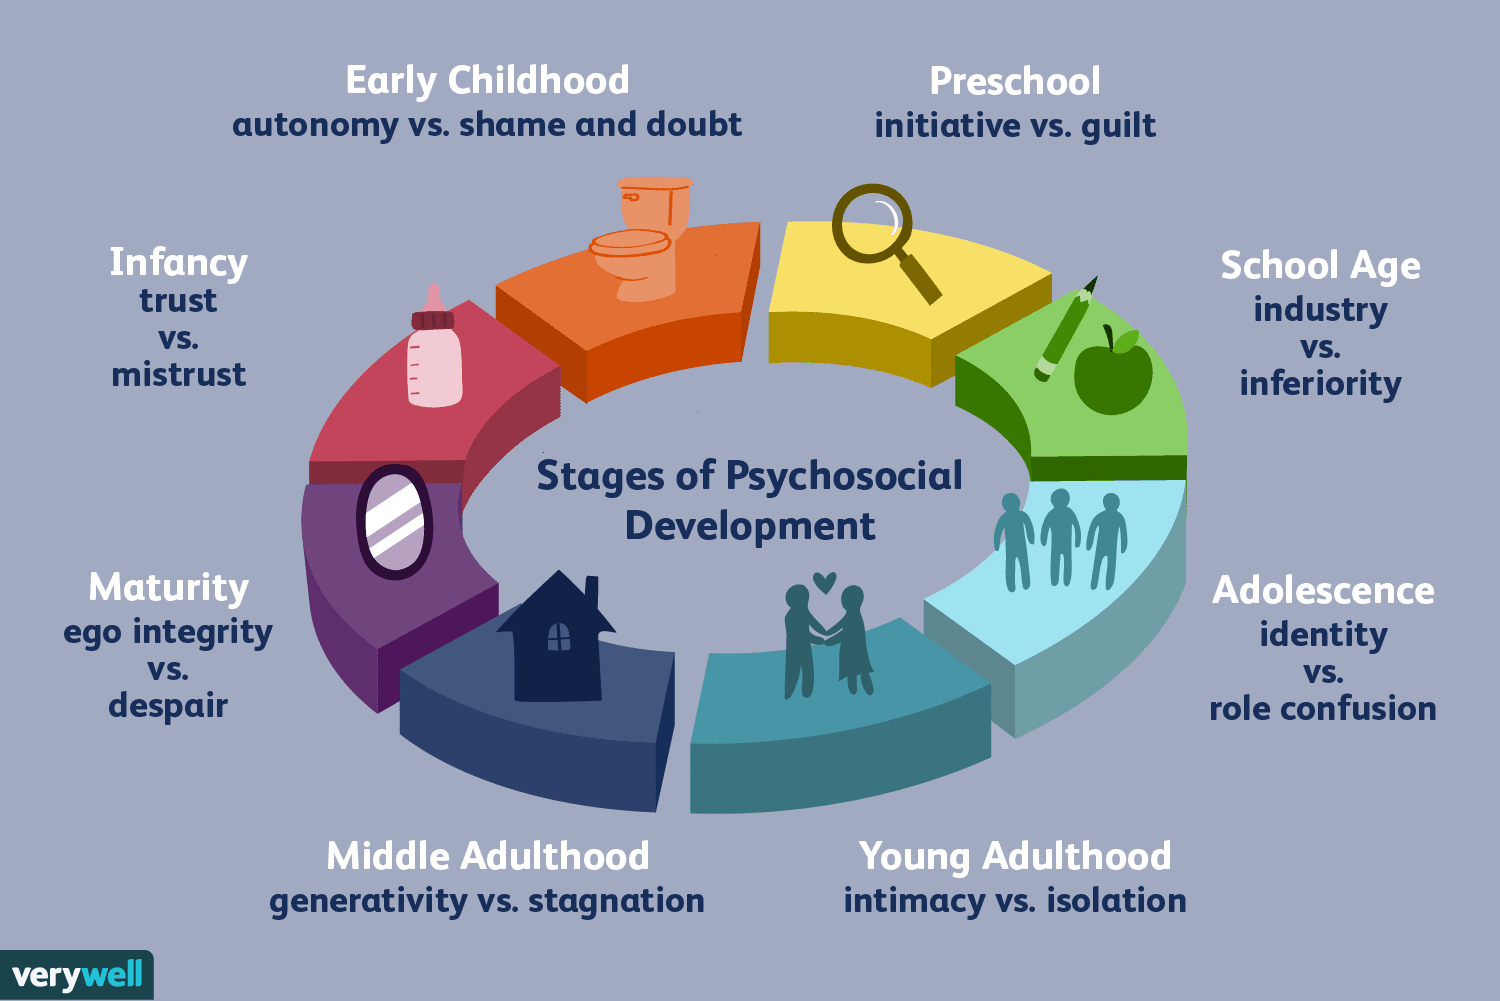 Erik Erikson’s Stages of Psychosocial Development